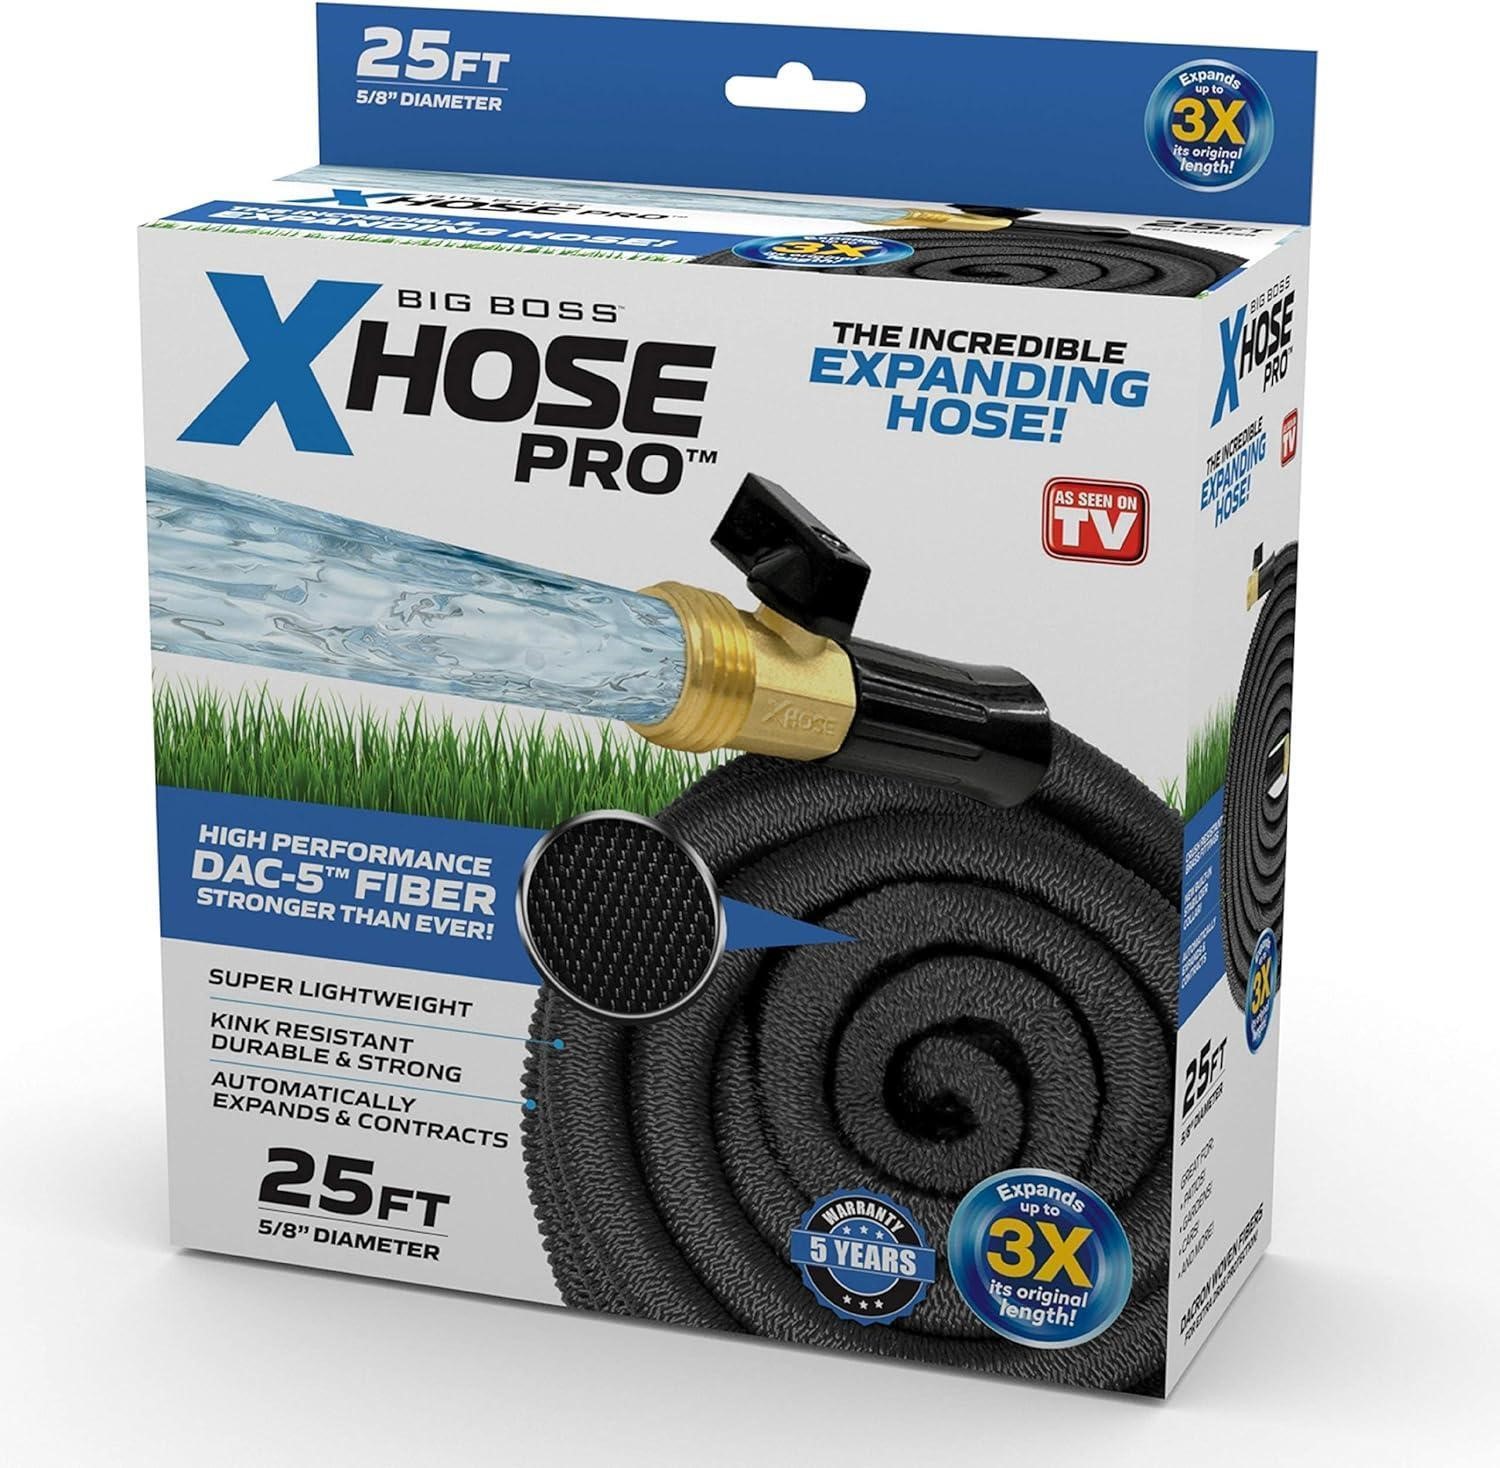 USED-X-Hose Pro Expandable Garden Hose 25Ft